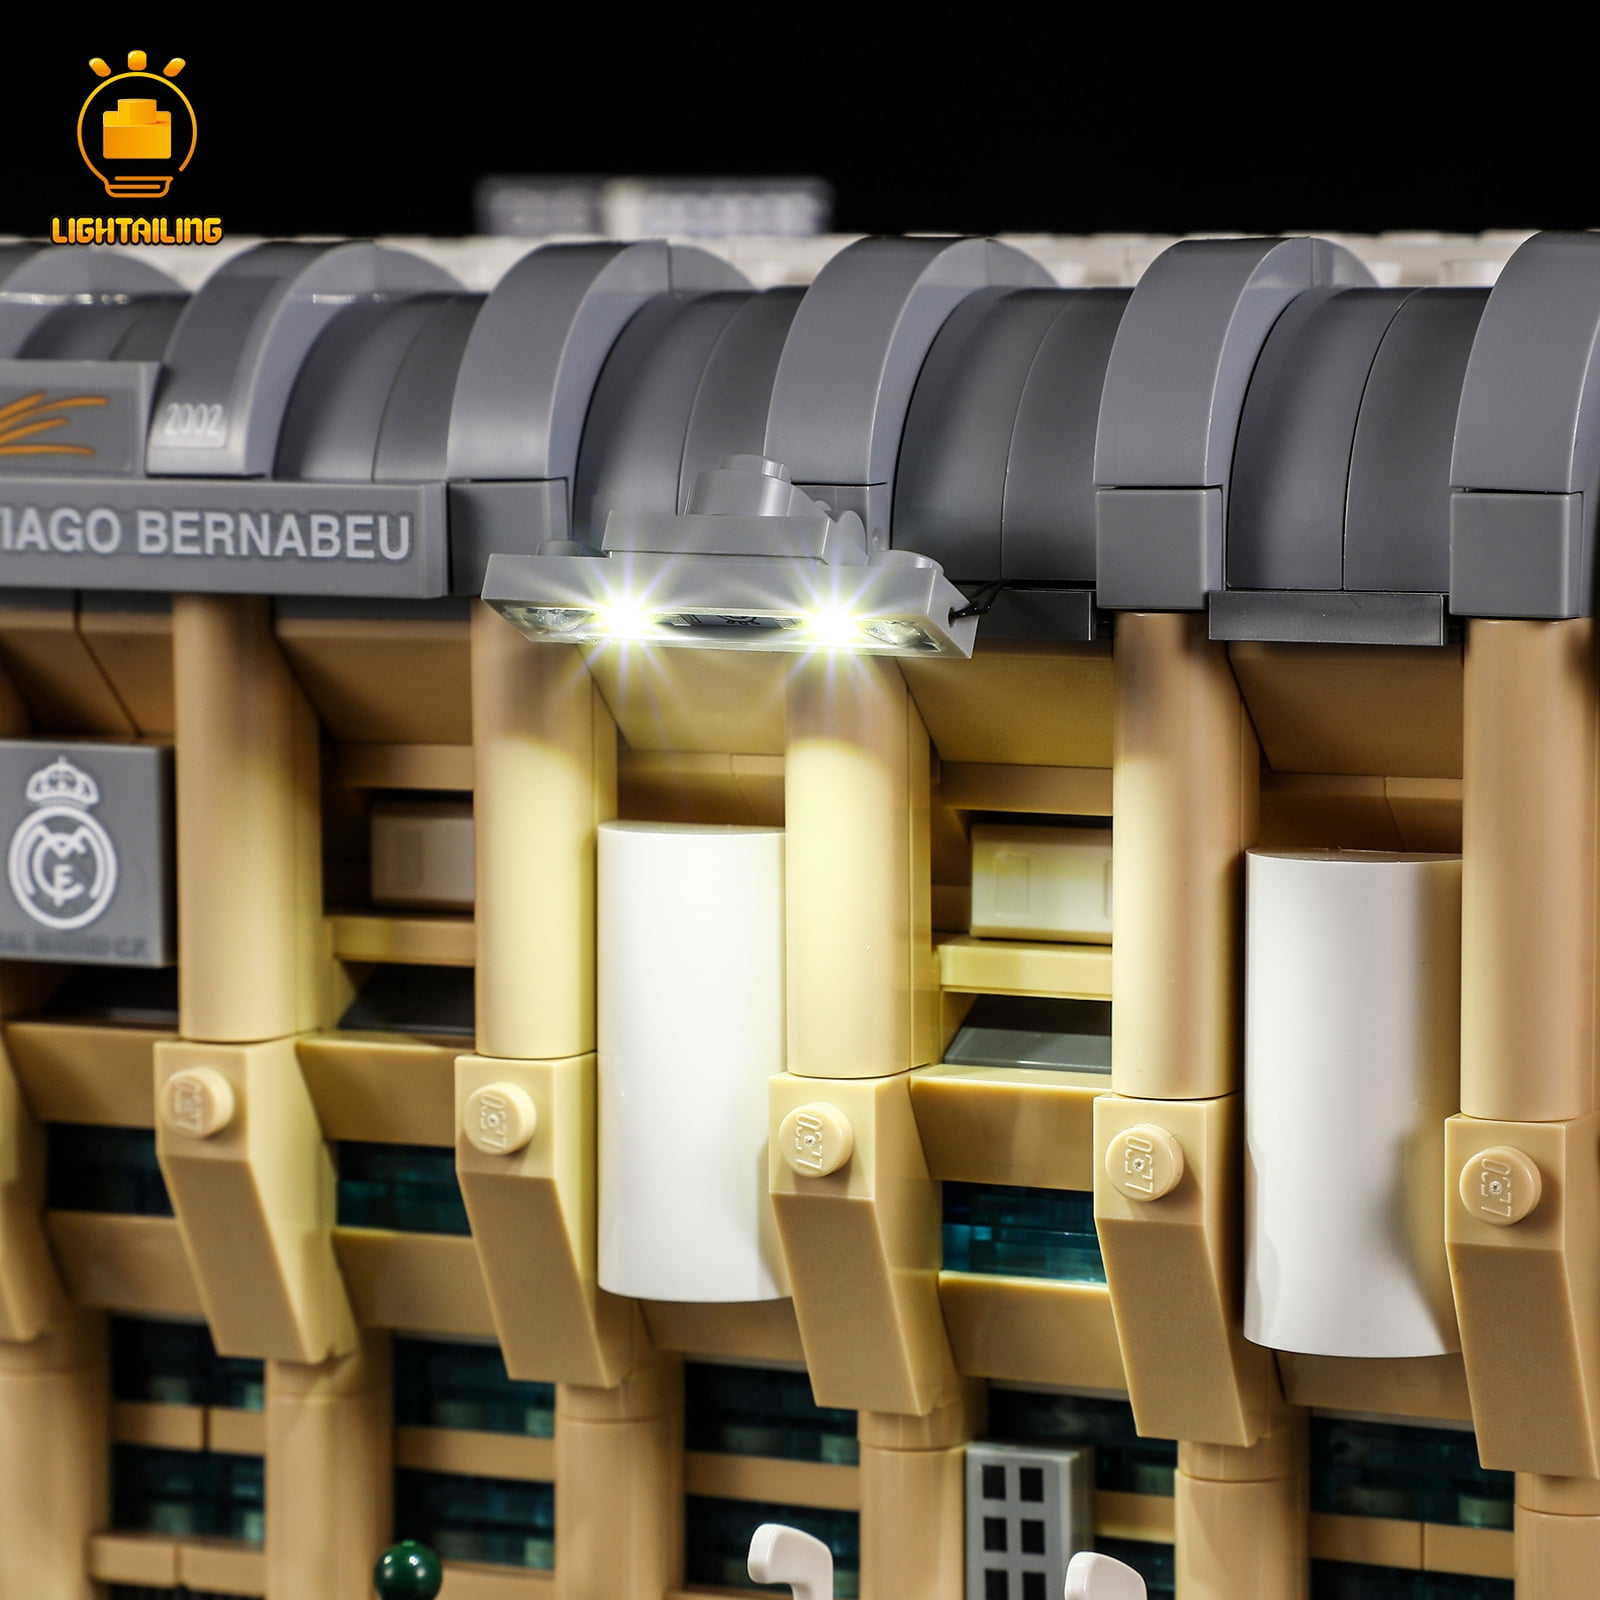 Led Light kit for (Real Madrid Santiago Bernabeu Stadium 10299) Building  Blocks Model, Building Lighting Kit Compatible with Lego 10299.(Only Led